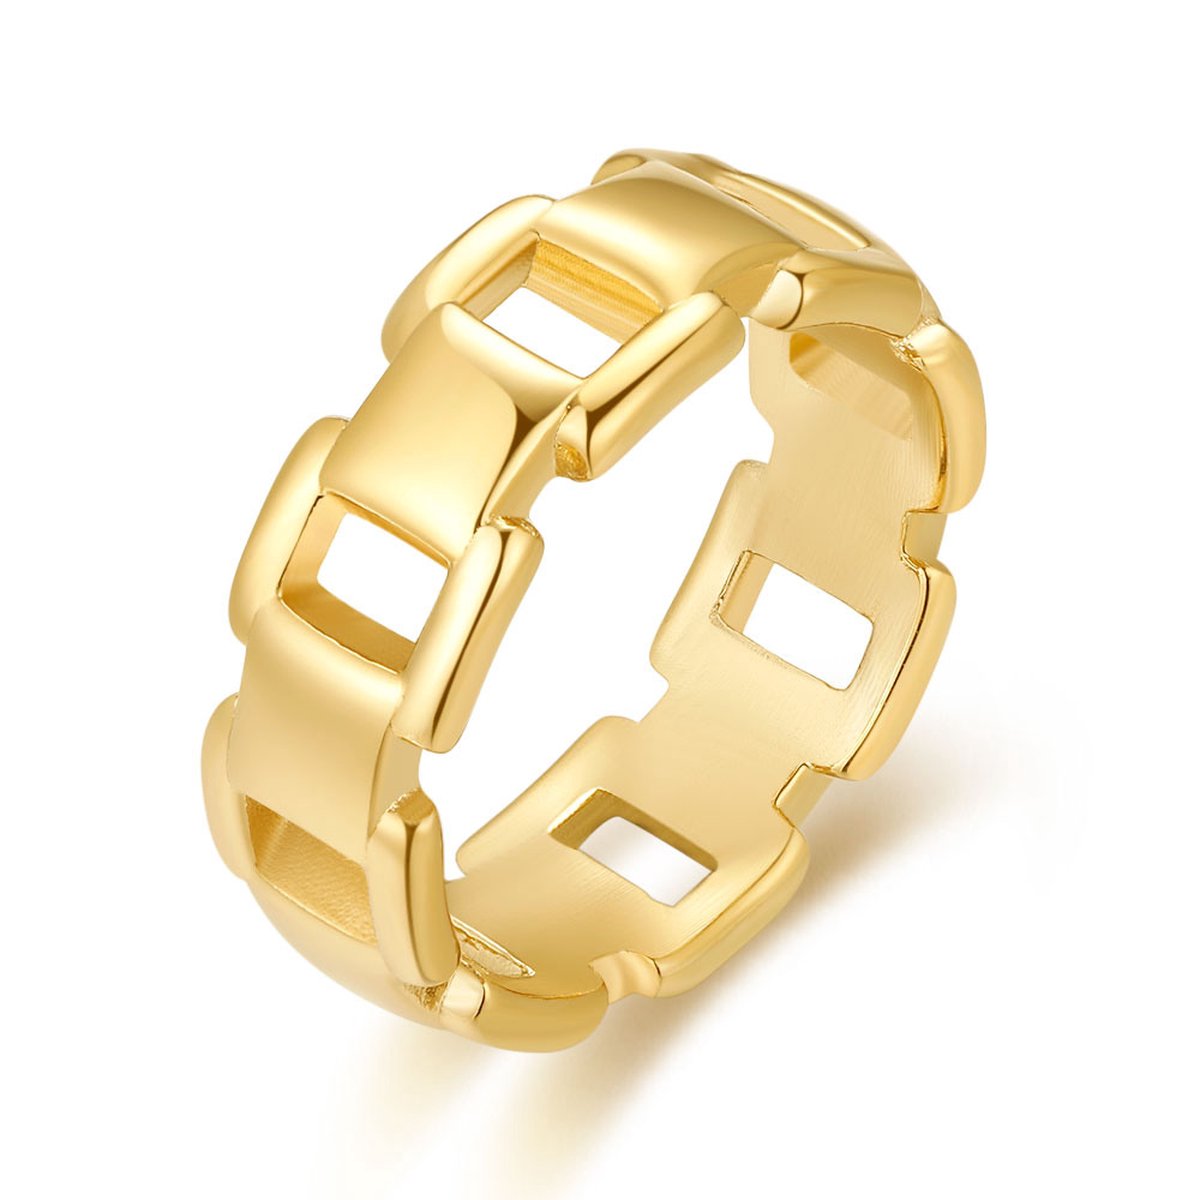 Twice As Nice Ring in goudkleurig edelstaal, rechthoekige schakels 50